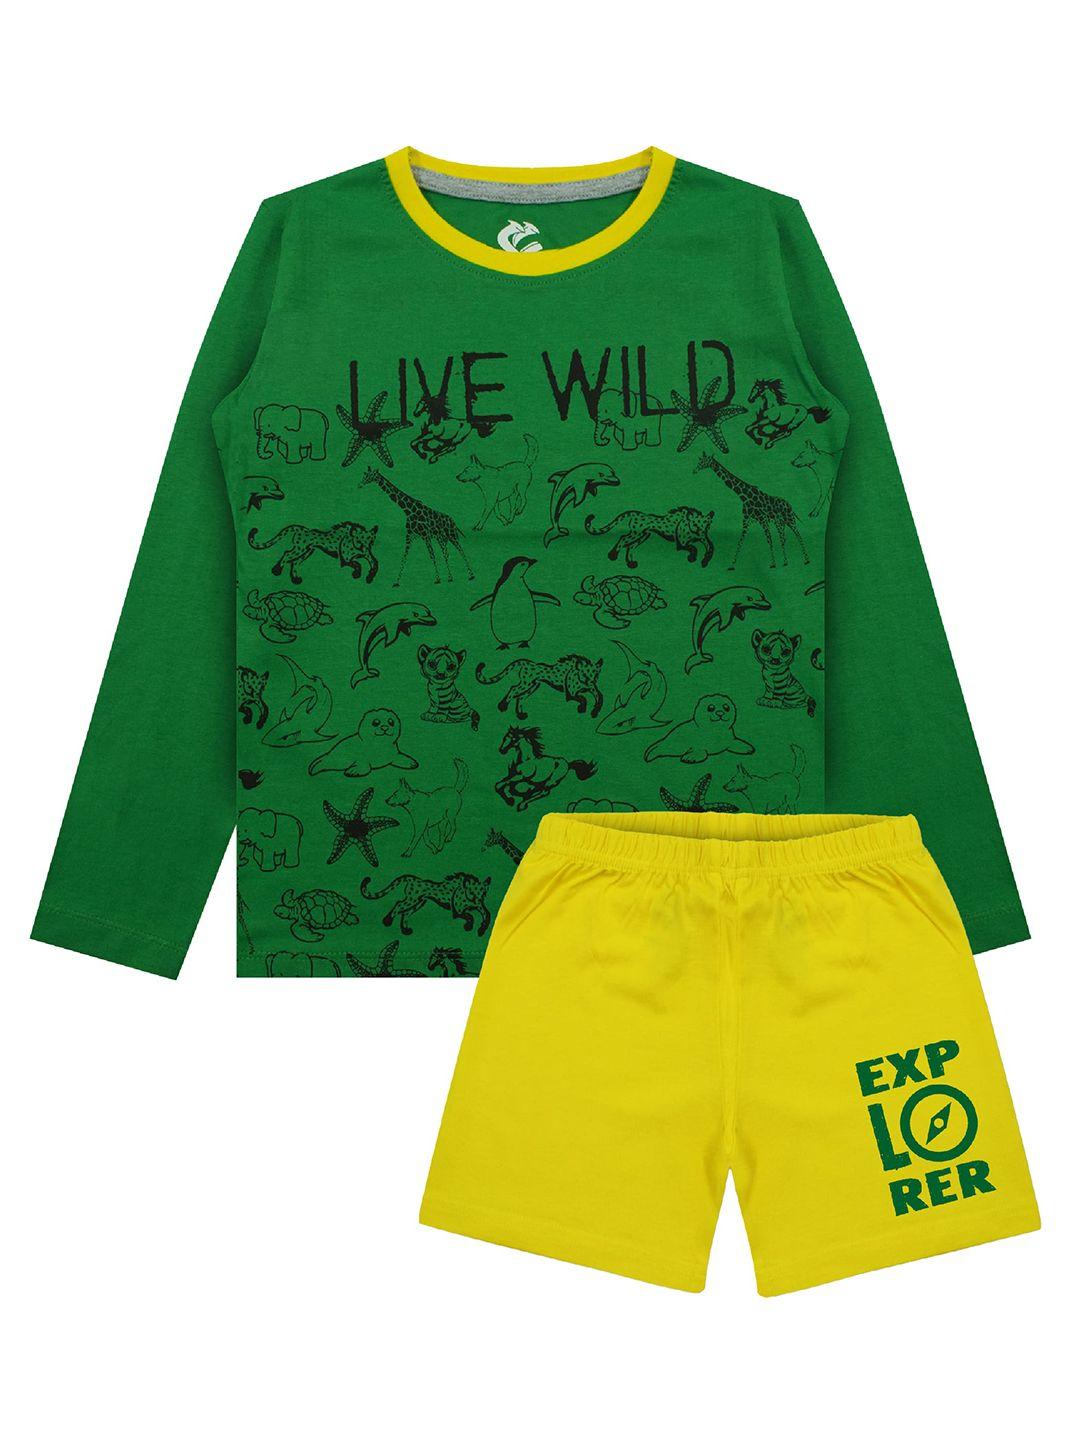 silver fang boys green & yellow cotton printed t-shirt with shorts set